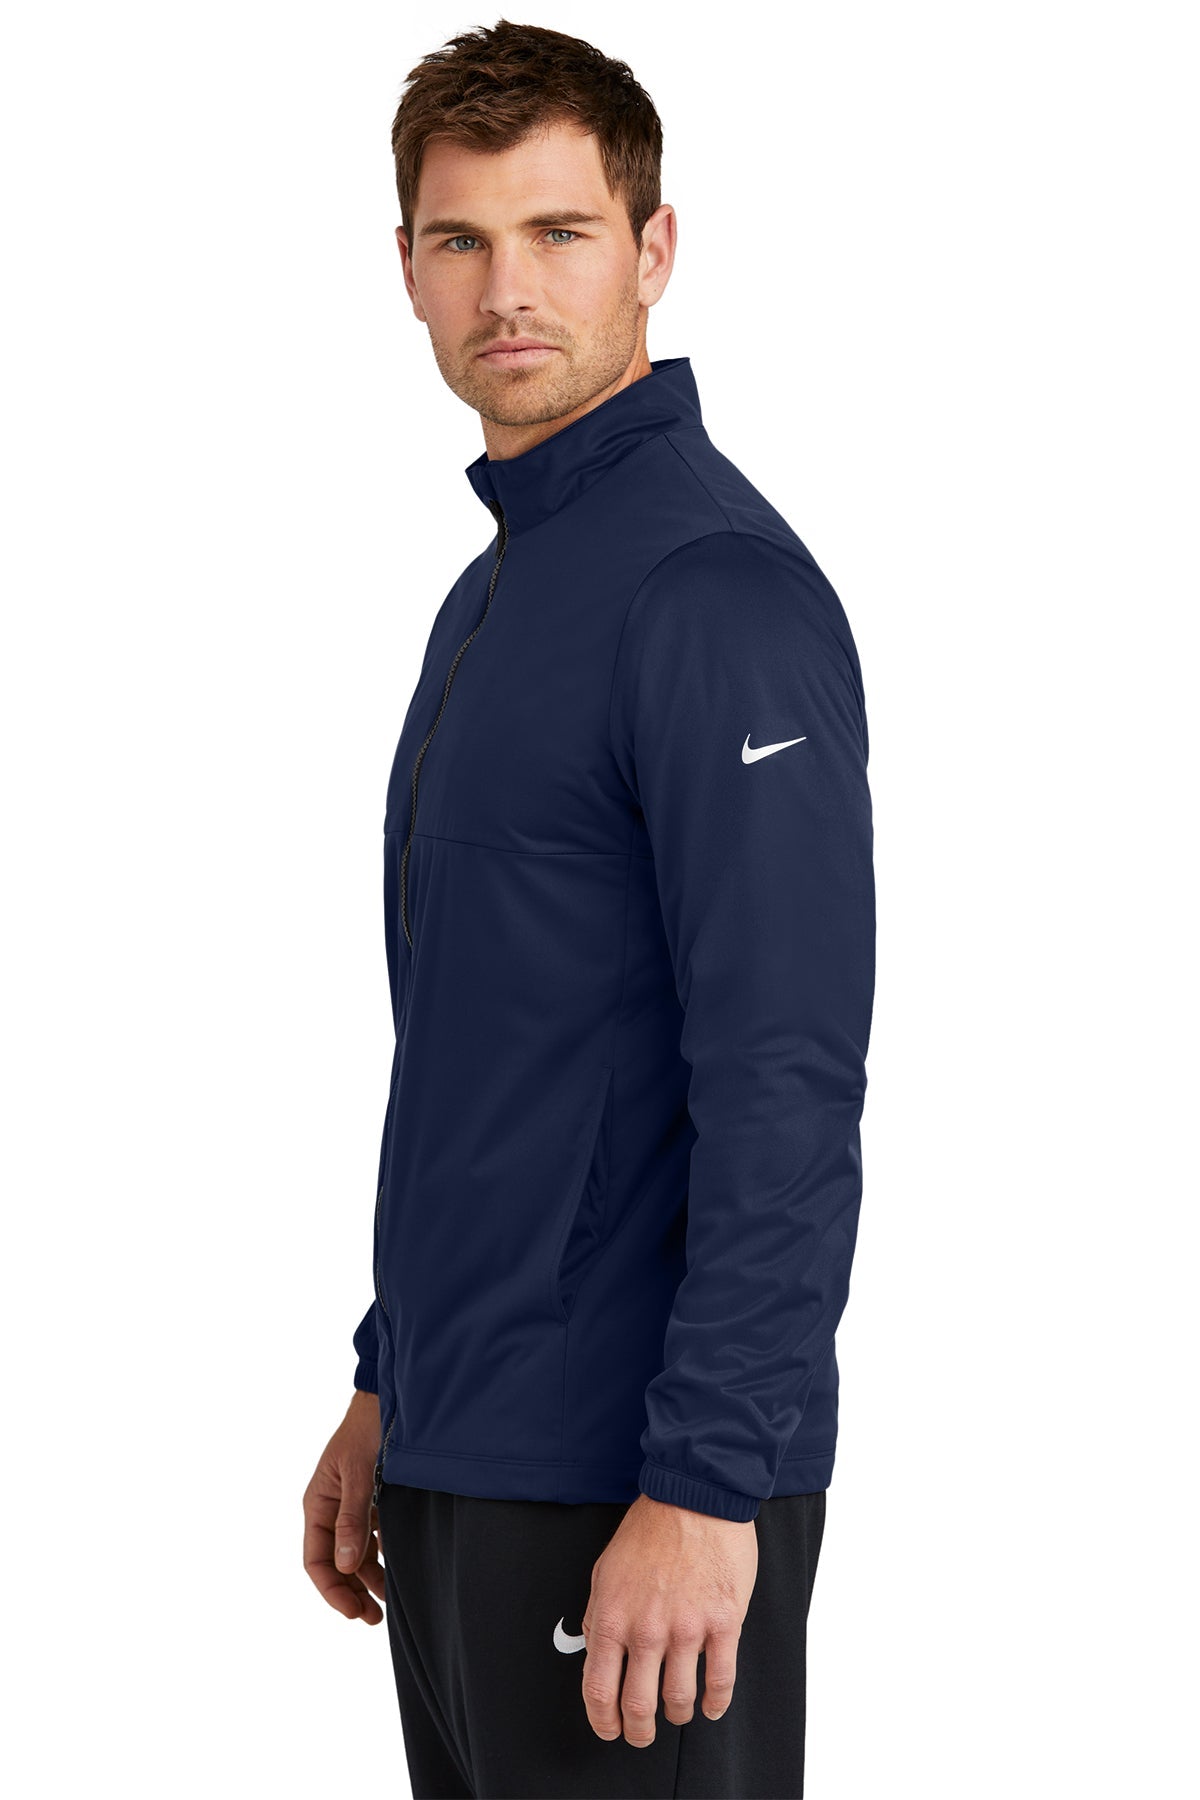 Nike Storm-FIT Full-Zip Custom Jackets, College Navy